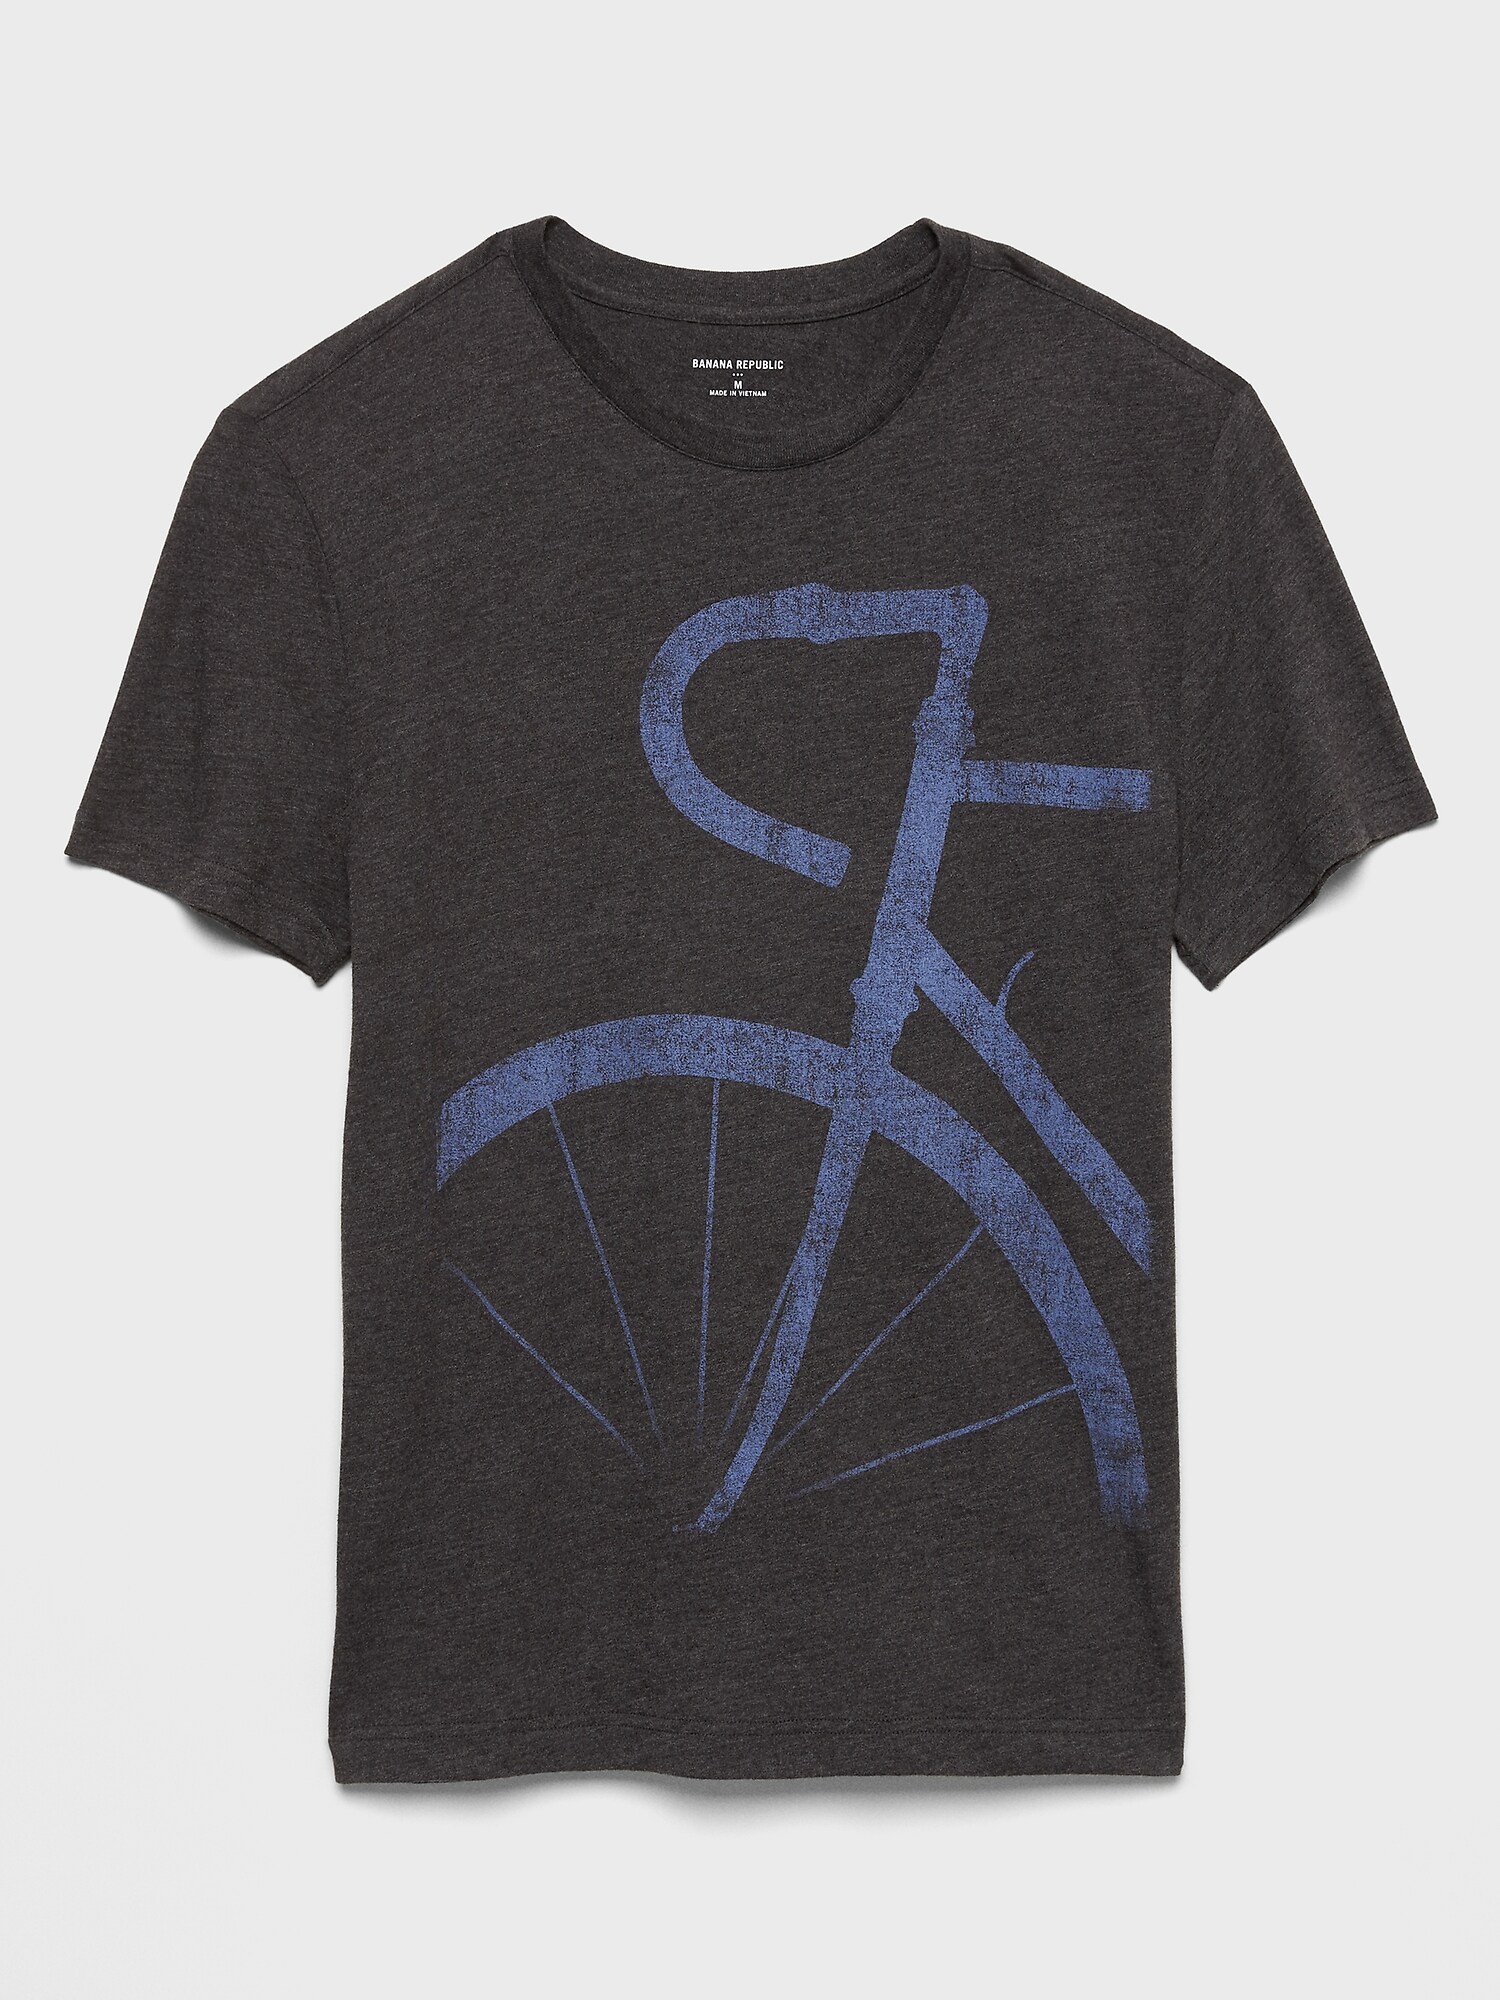 Exploded Bike Graphic T Shirt